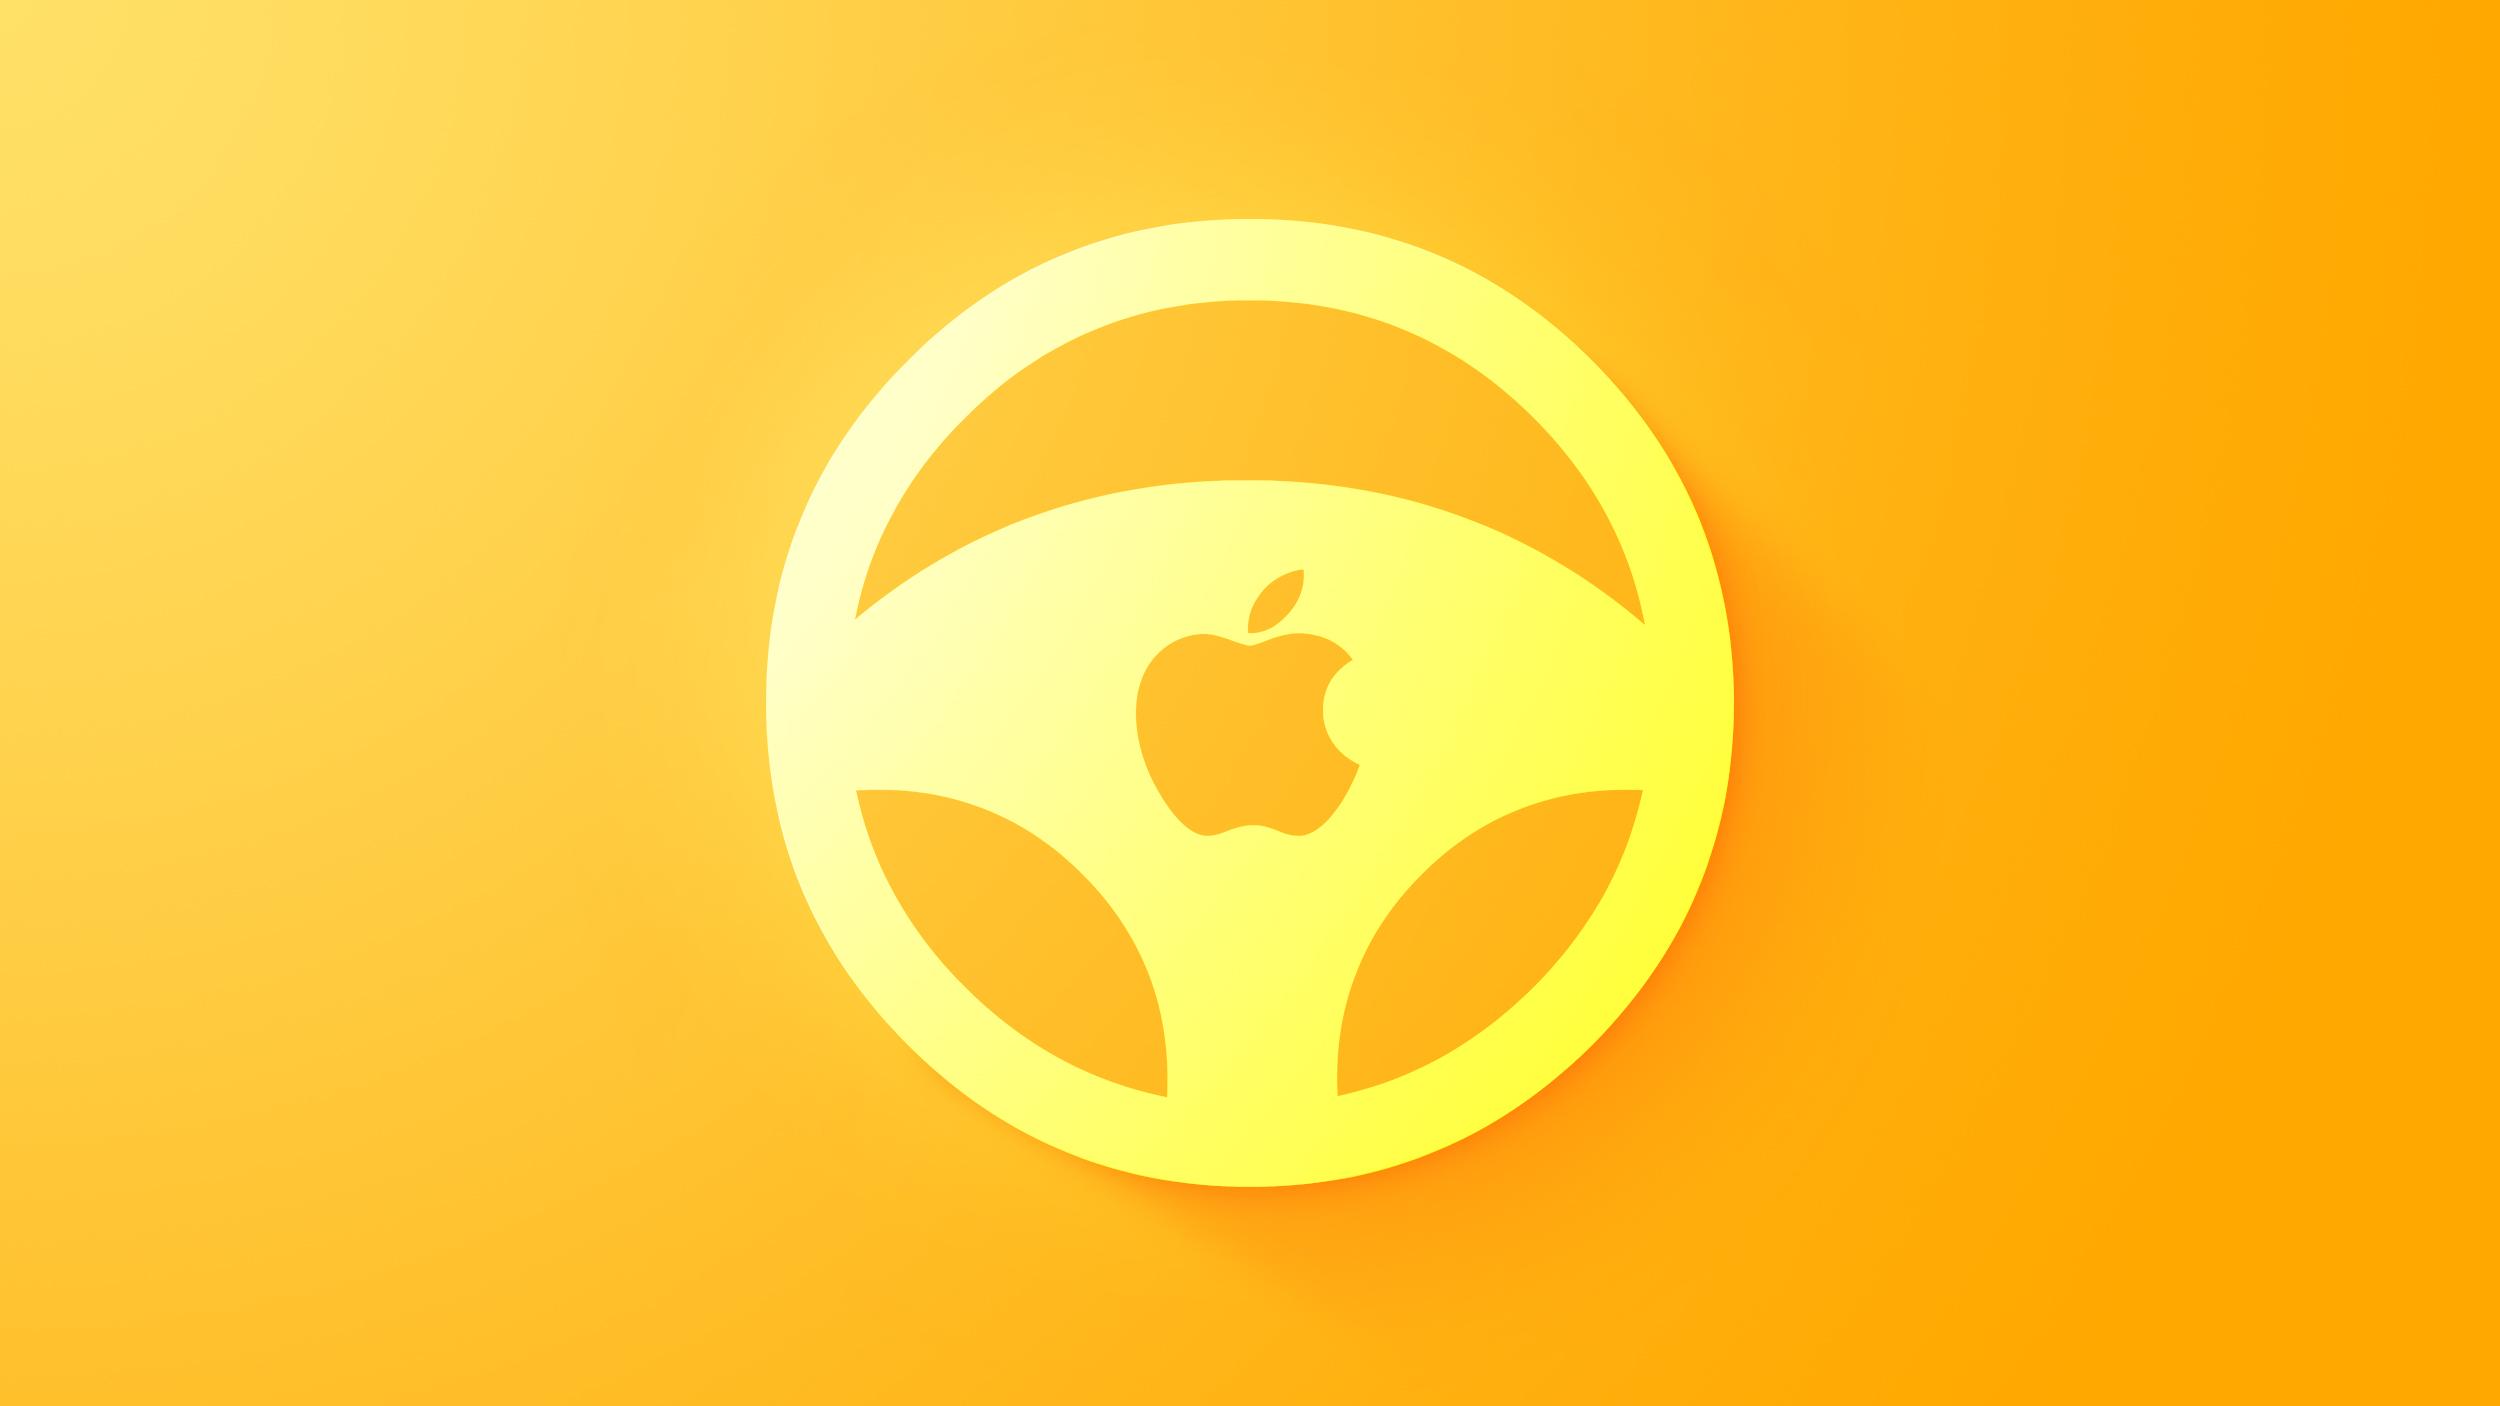 Apple car wheel icon feature yellow